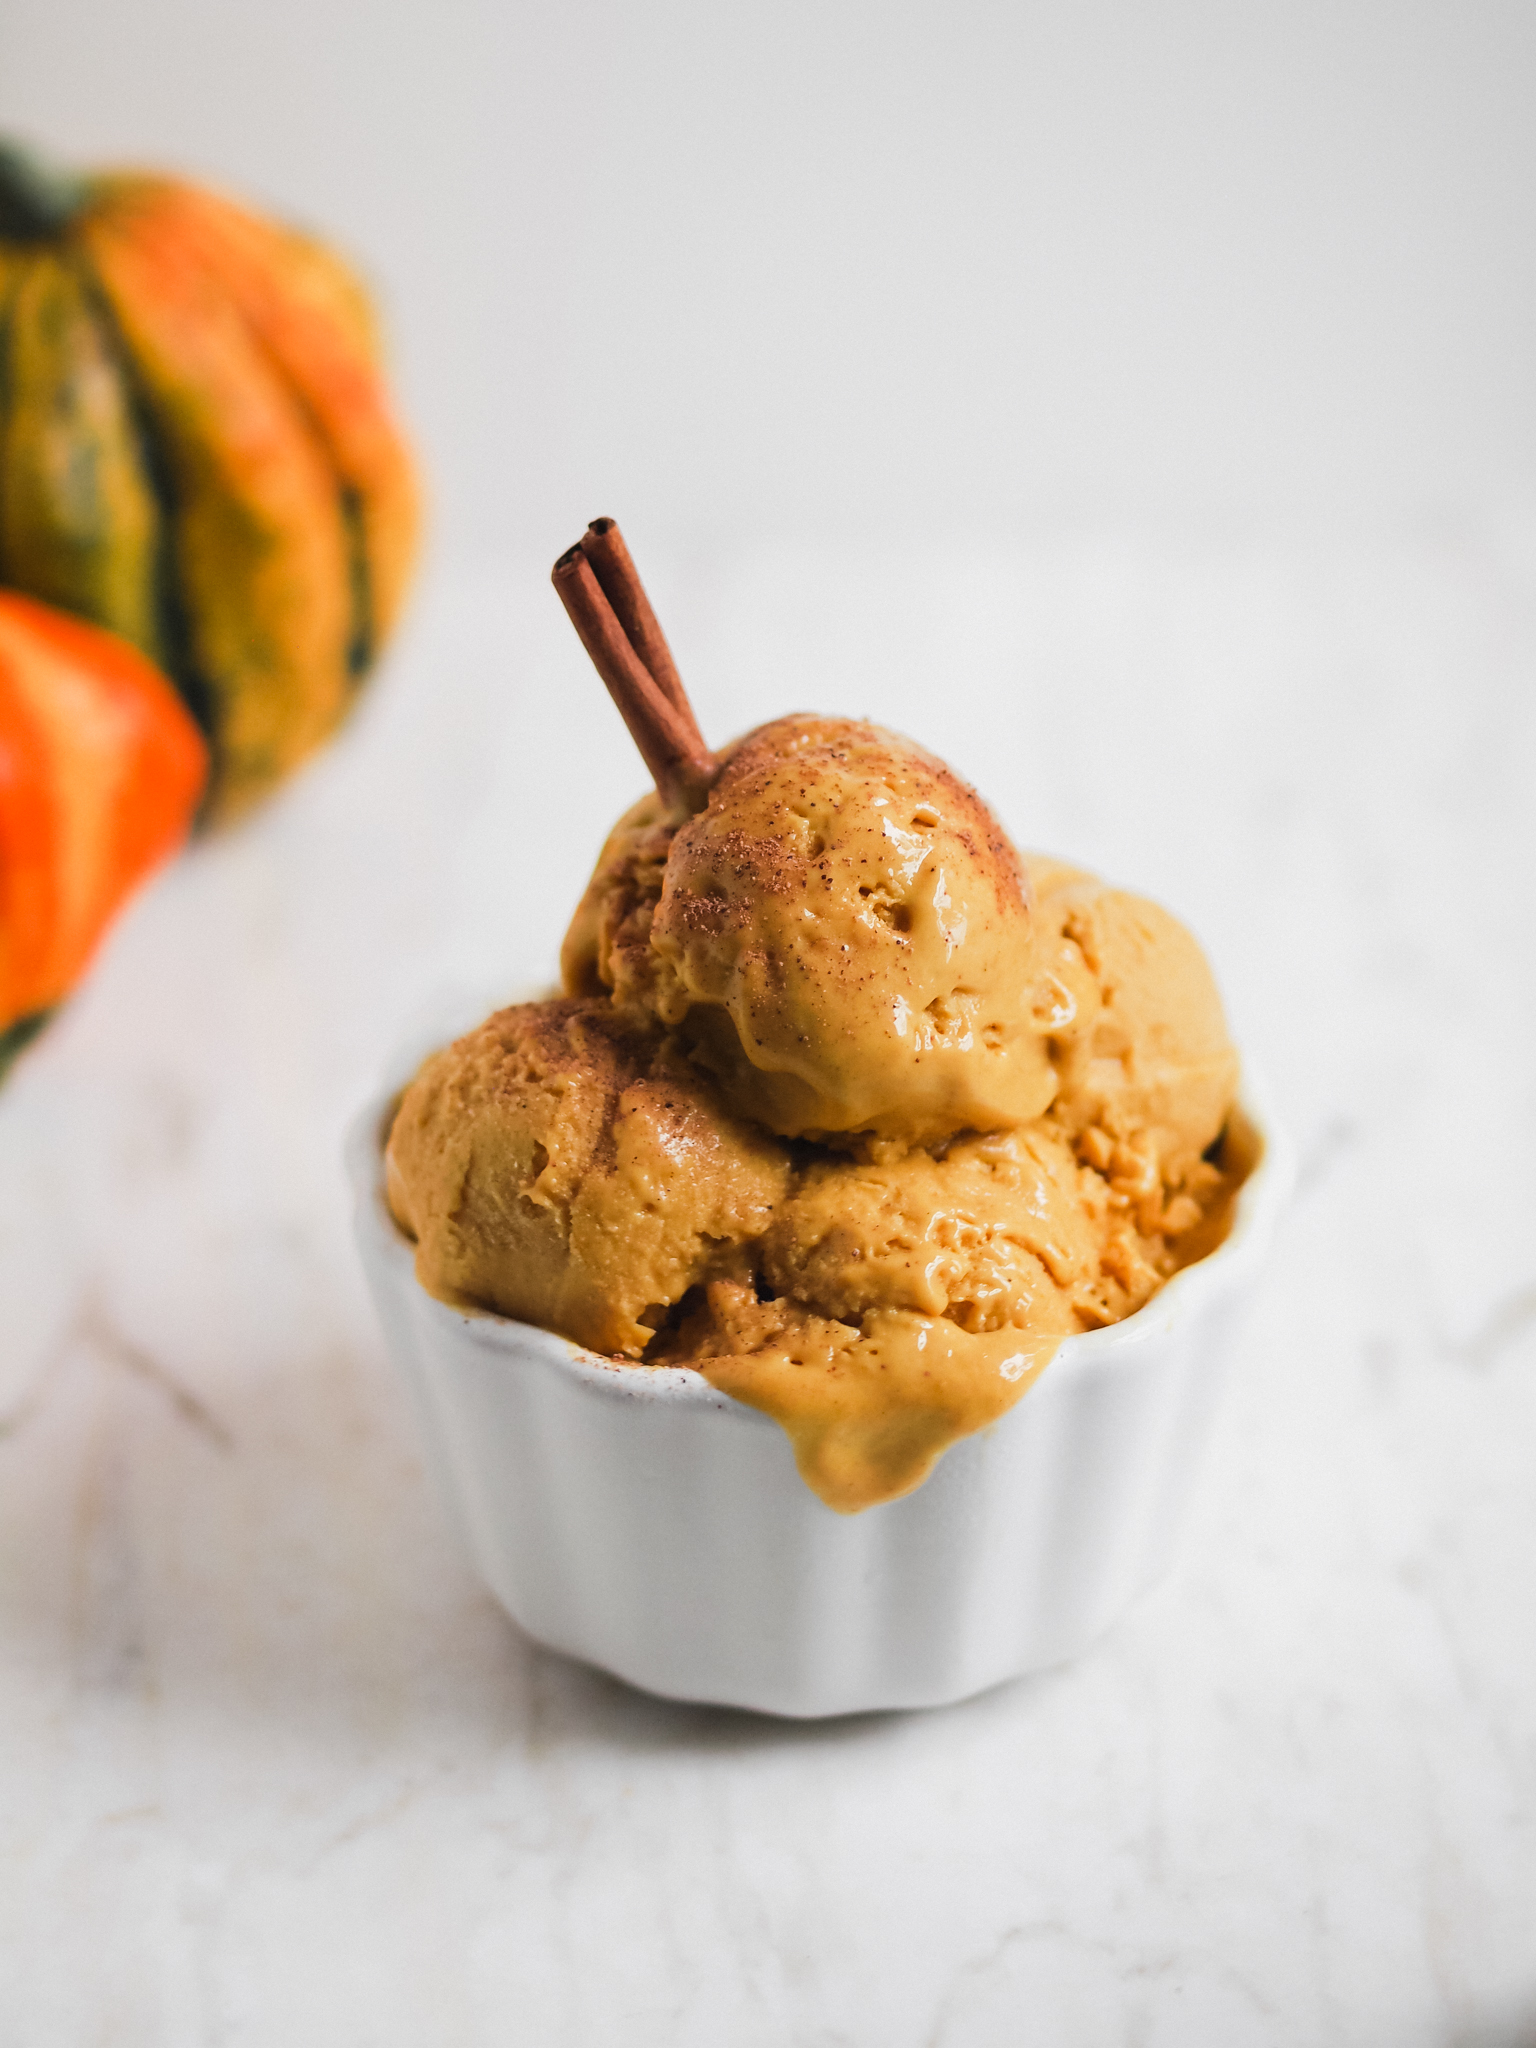 Healthier Vegan Pumpkin Ice Cream! Low-fat, NO coconut milk or cashews!